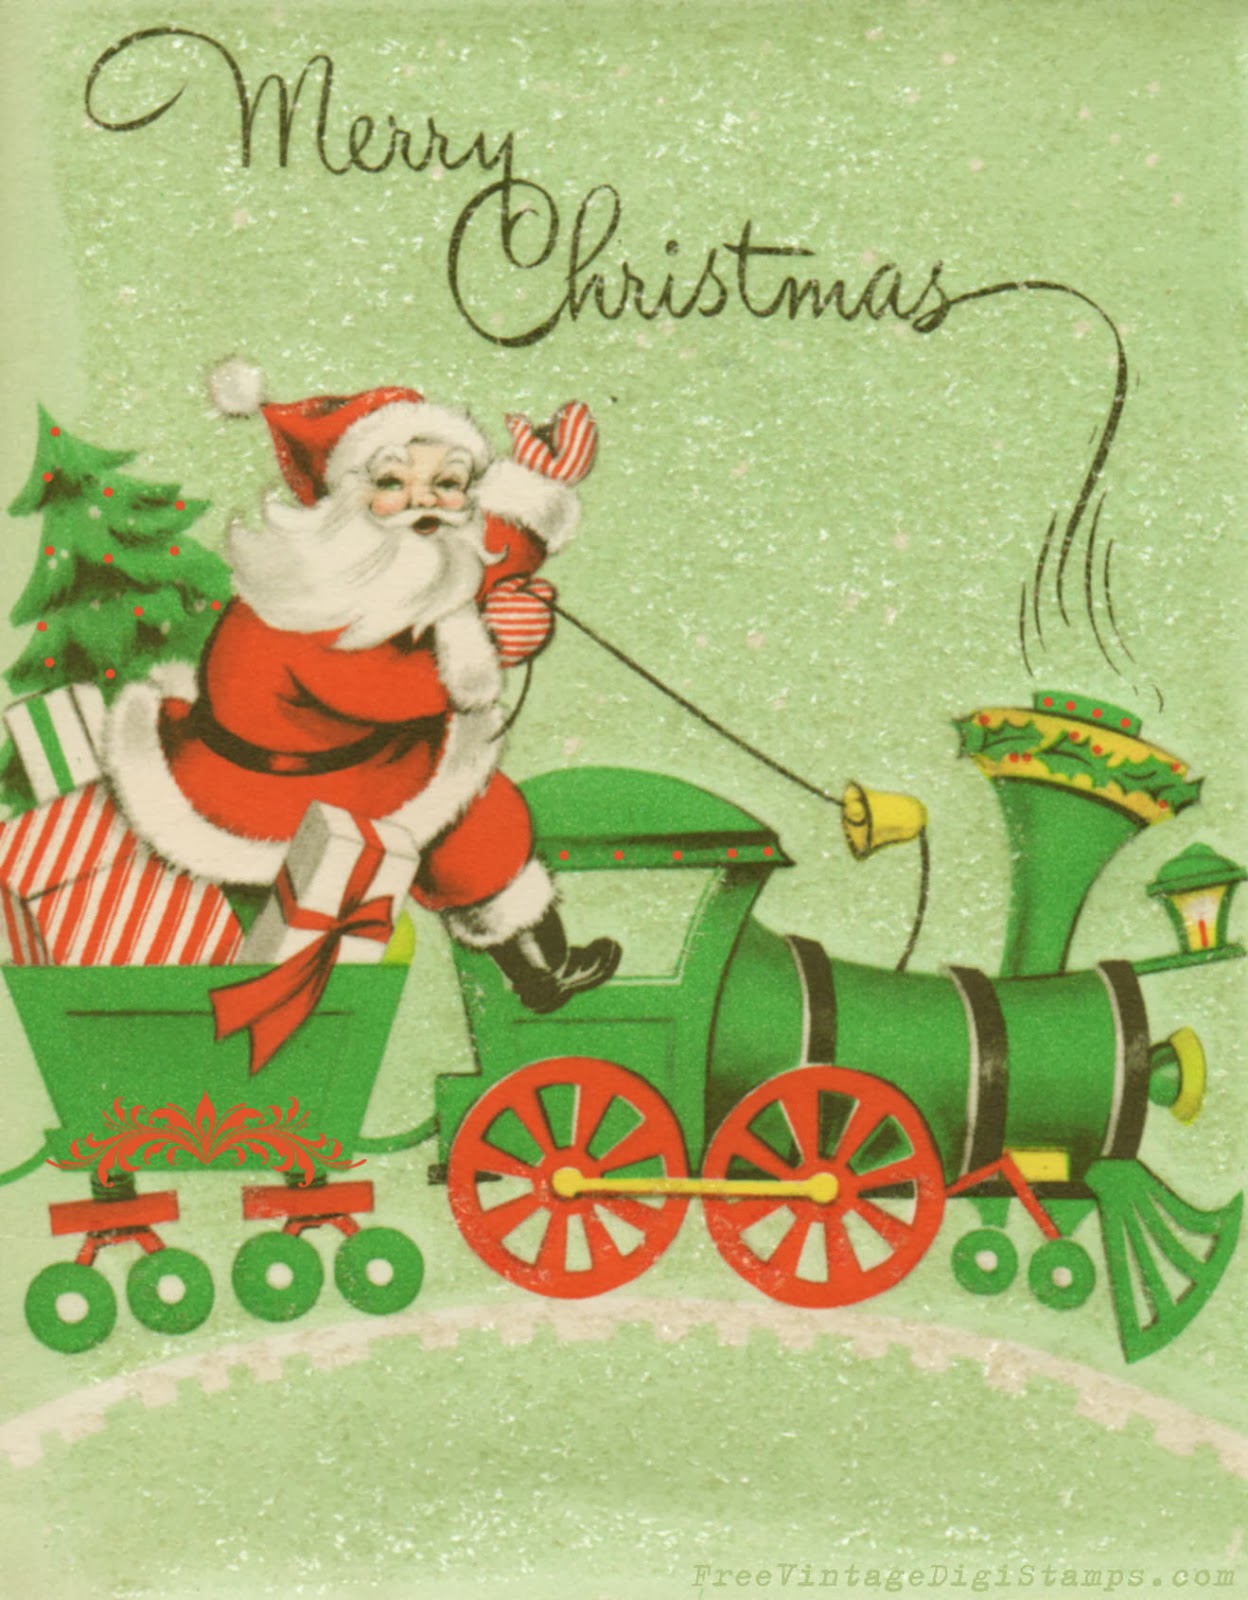 free-vintage-digital-stamps-vintage-printable-santa-riding-a-train